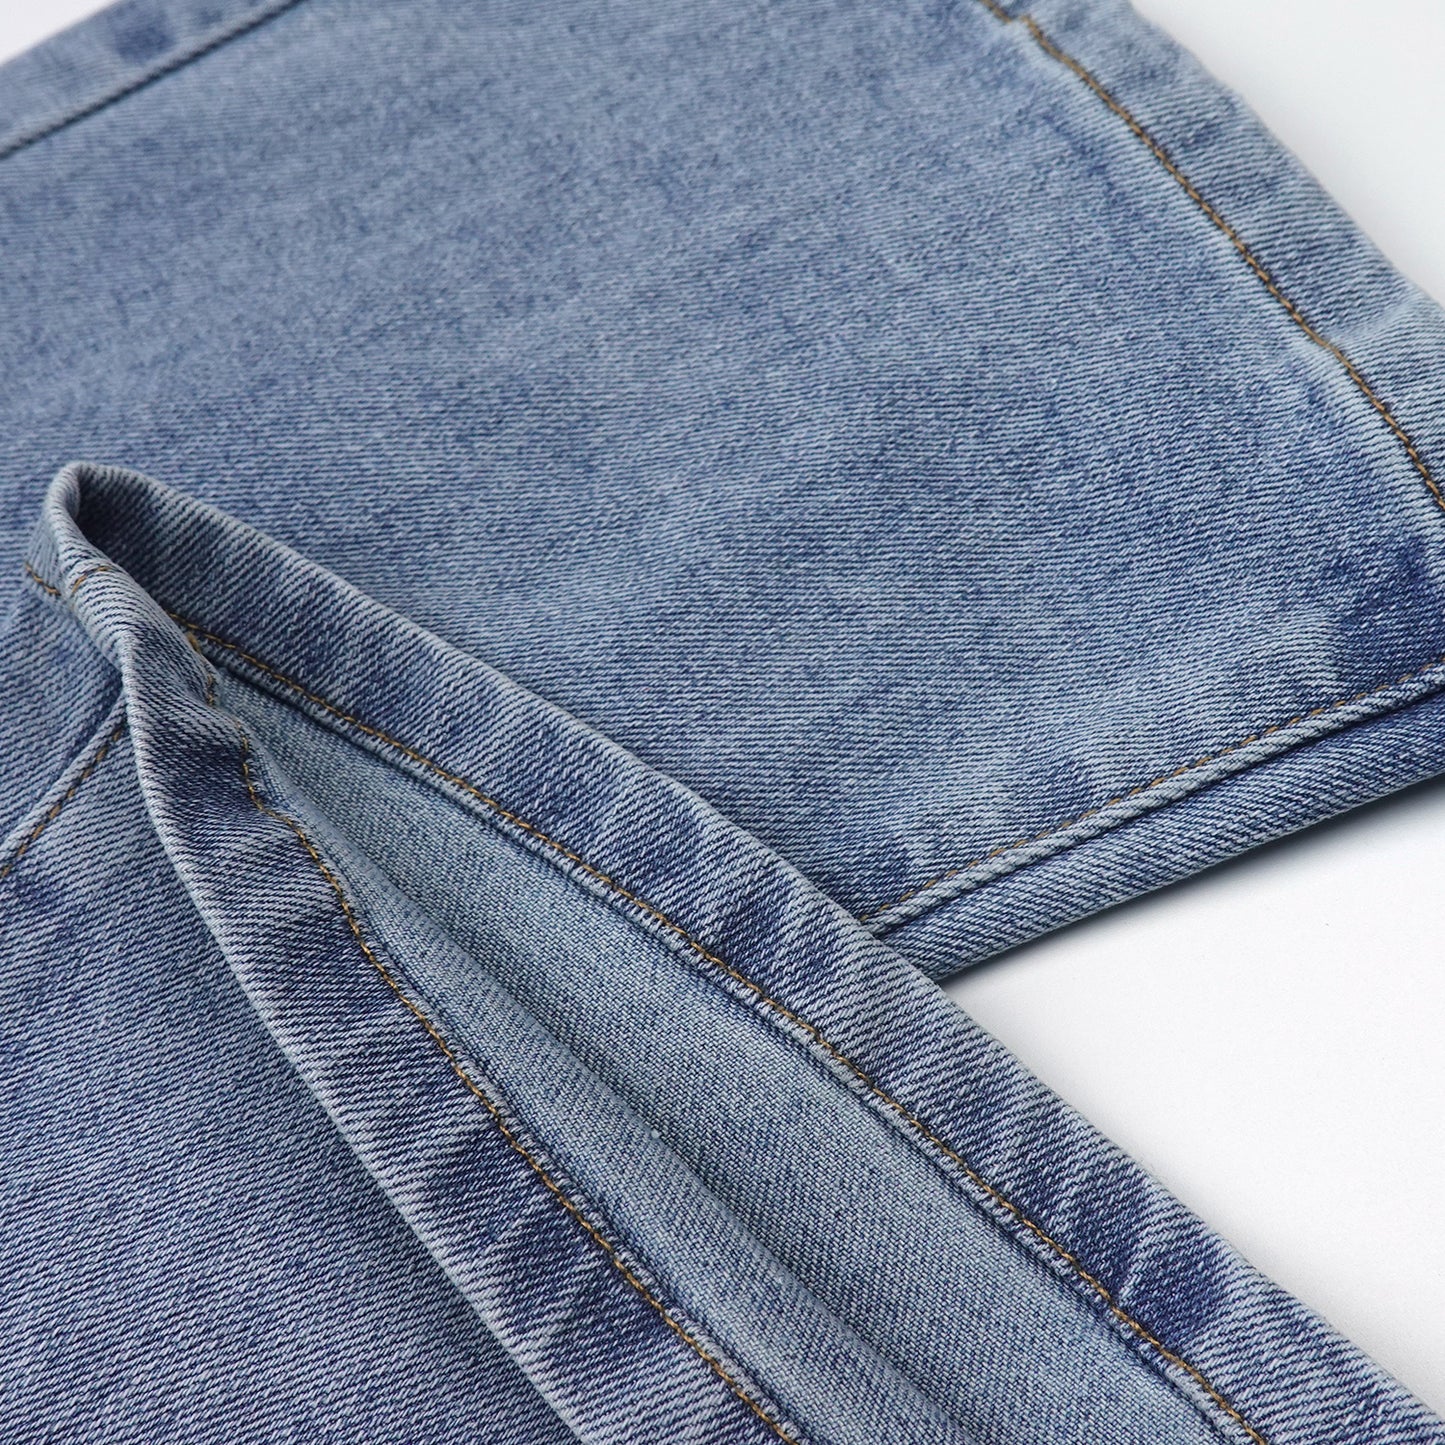 Girls Flared Denim Pants, 5-14T Elastic Waistband Inside Stretchy Slim Jeans